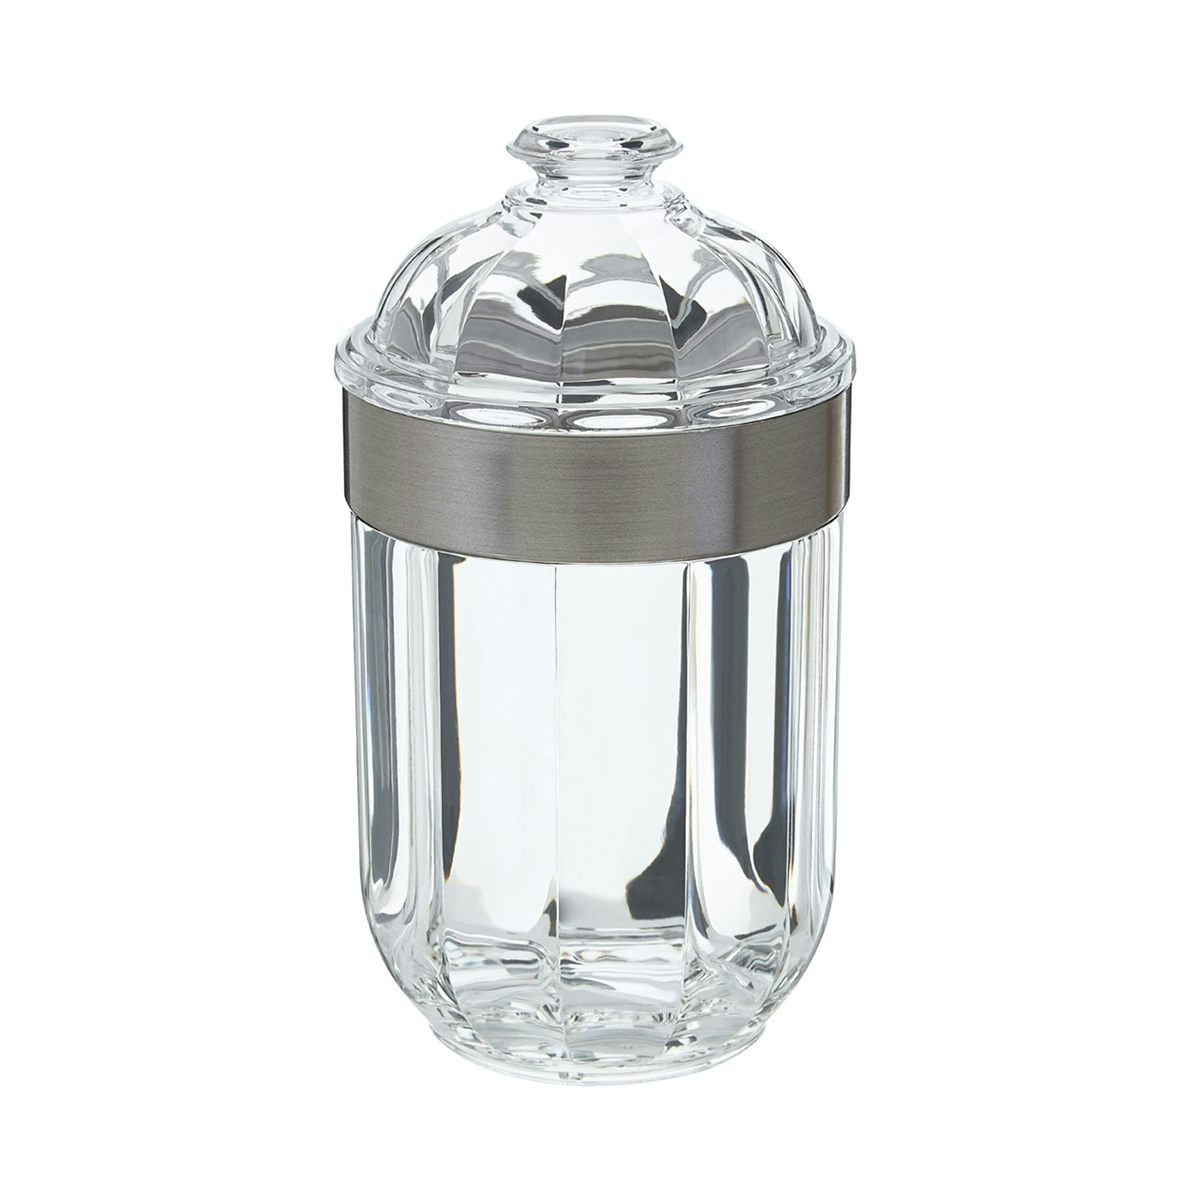 Accents Silver medium acrylic storage jar